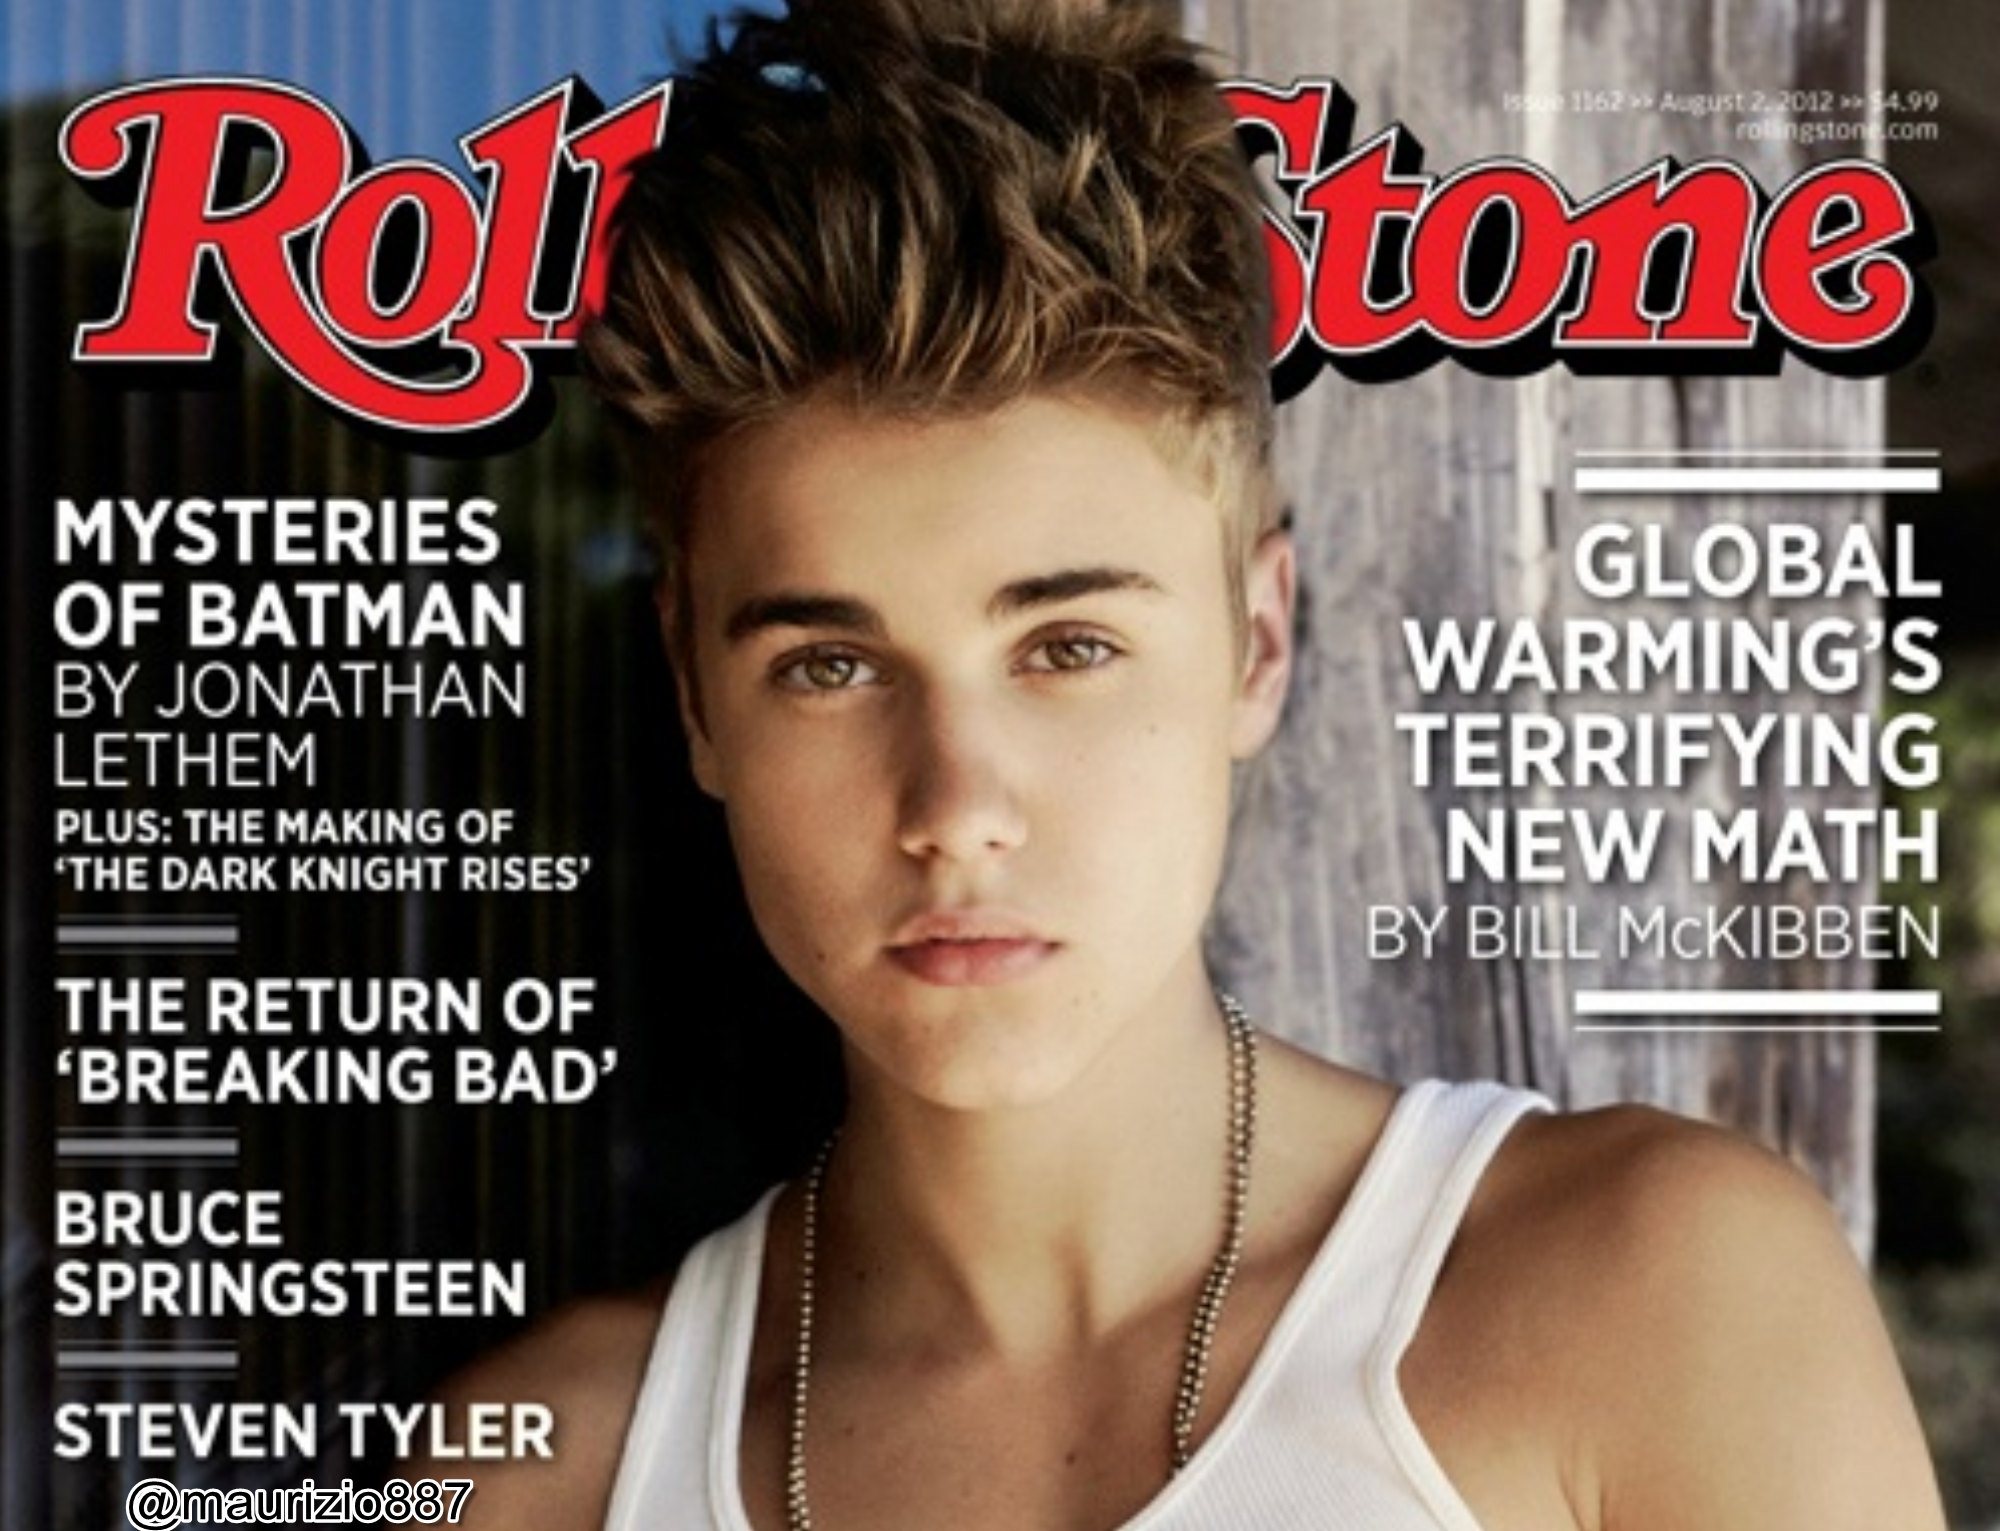 Justin Bieber Rolling Stone Photoshoot